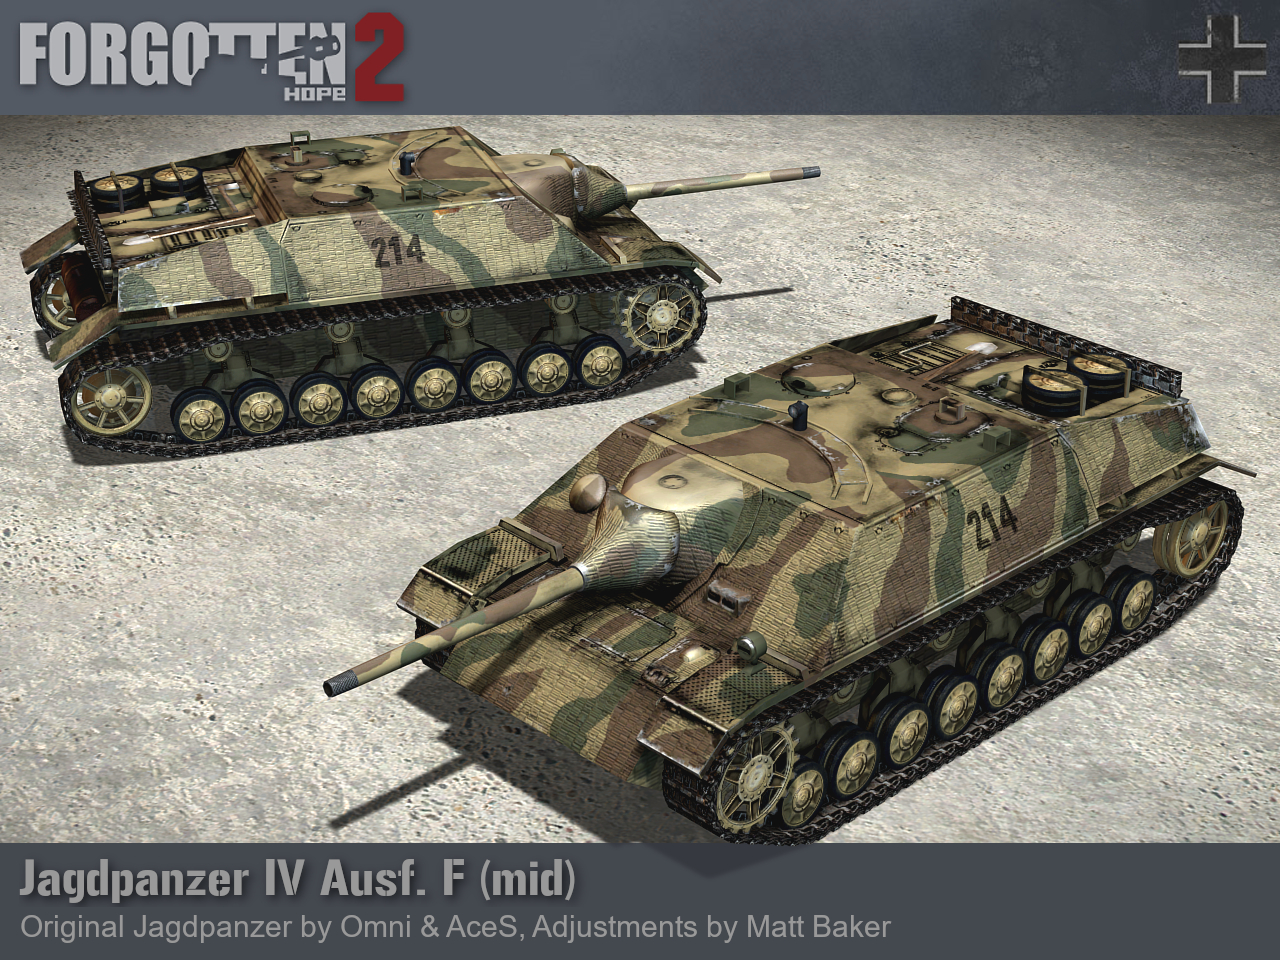 Jagdpanzer IV Ausf. F image - Forgotten Hope 2 mod for Battlefield 